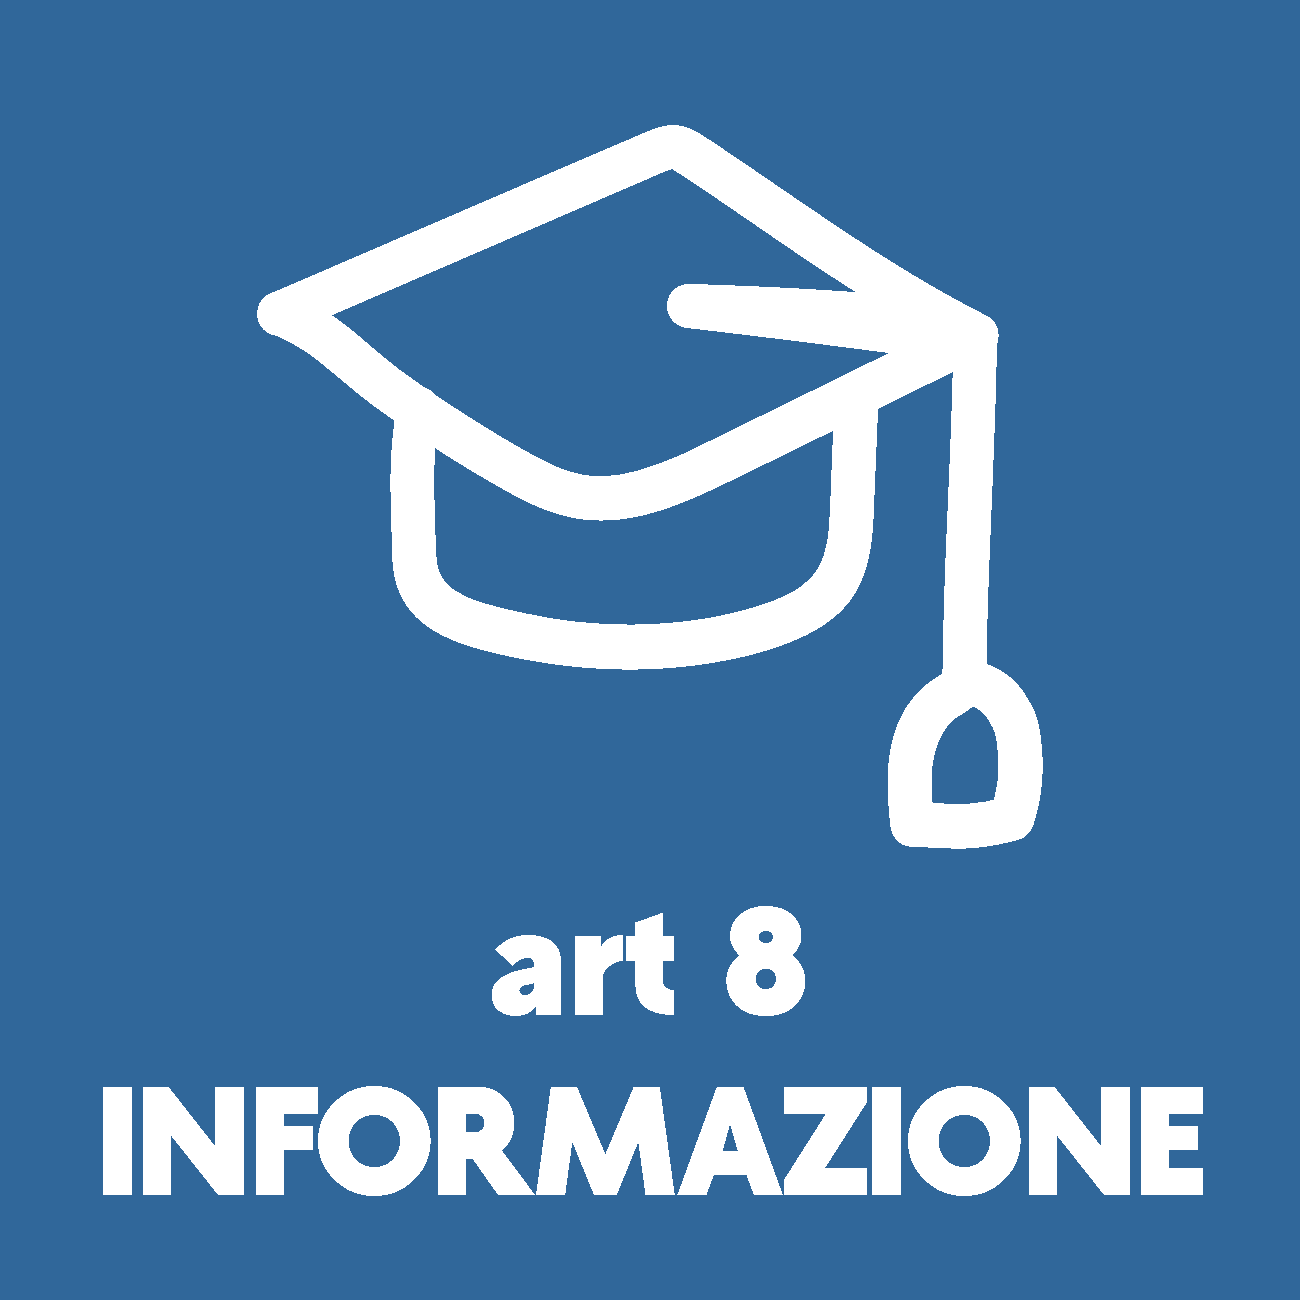 Art 08 information